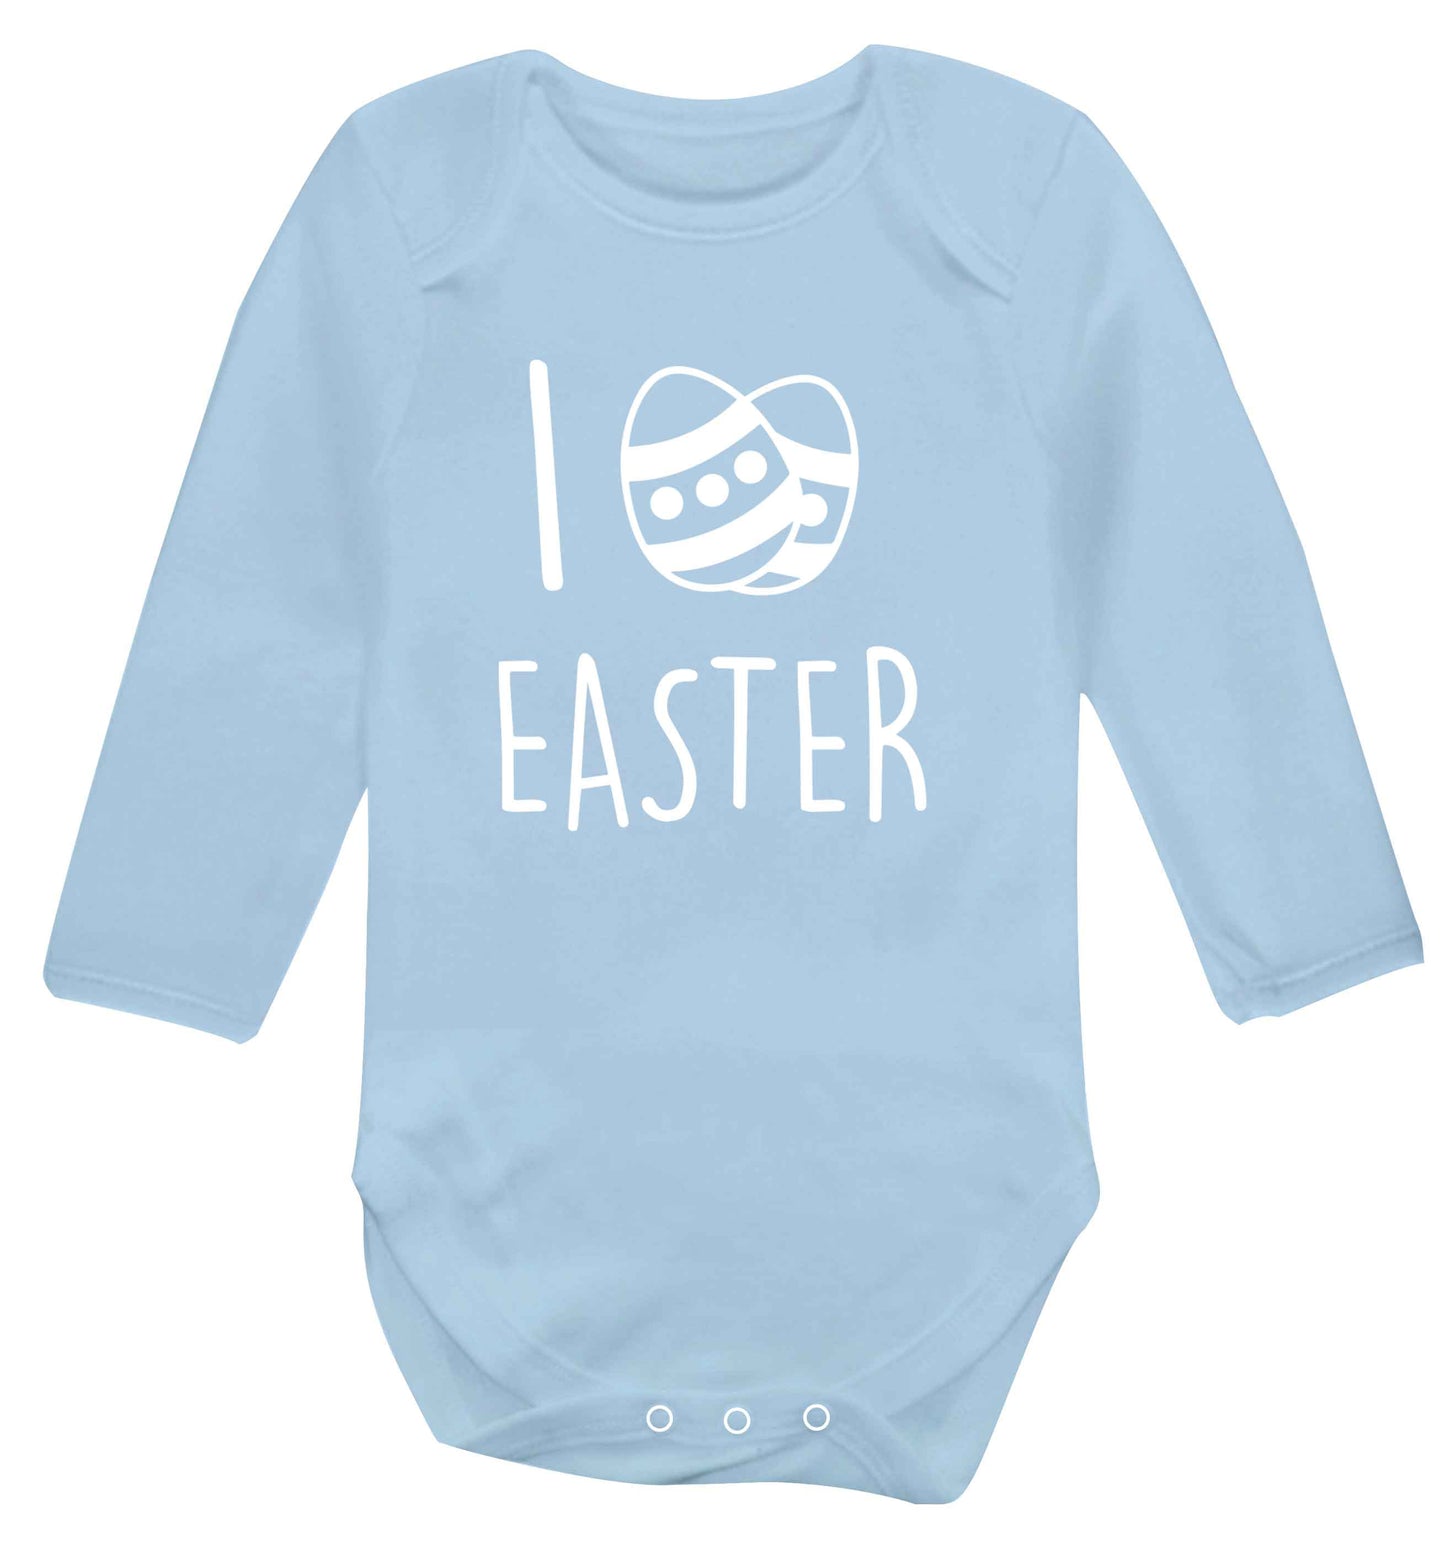 I love Easter baby vest long sleeved pale blue 6-12 months